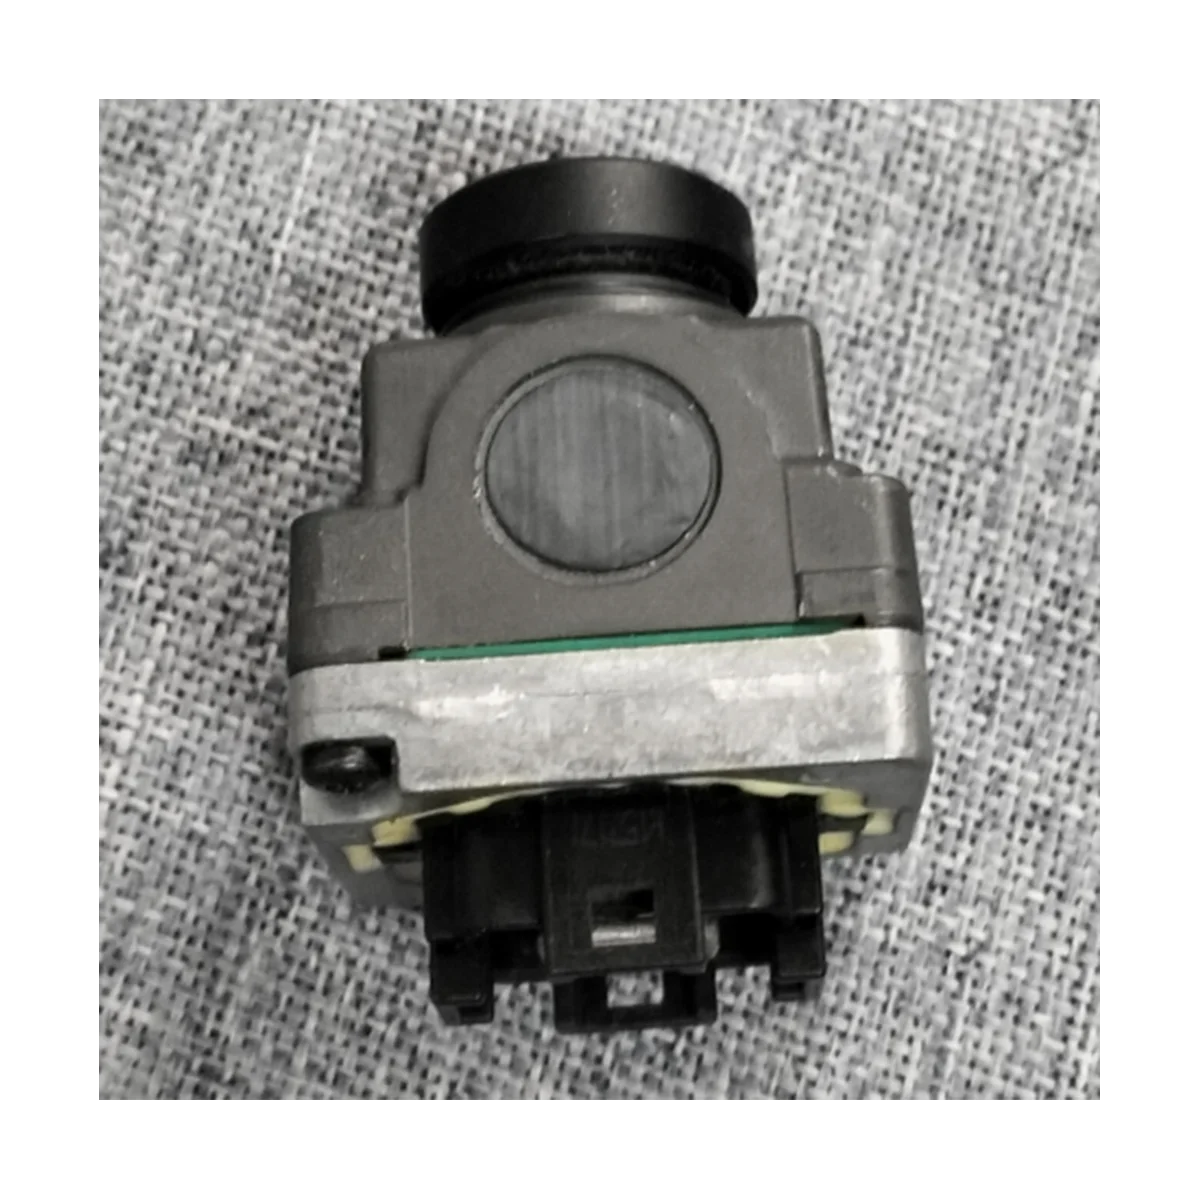 

Car Rear View Camera Reverse LR095387 LR078535 for Range Sport Evoque GJ32-19G590-BC Trunk Parking Assist Camera